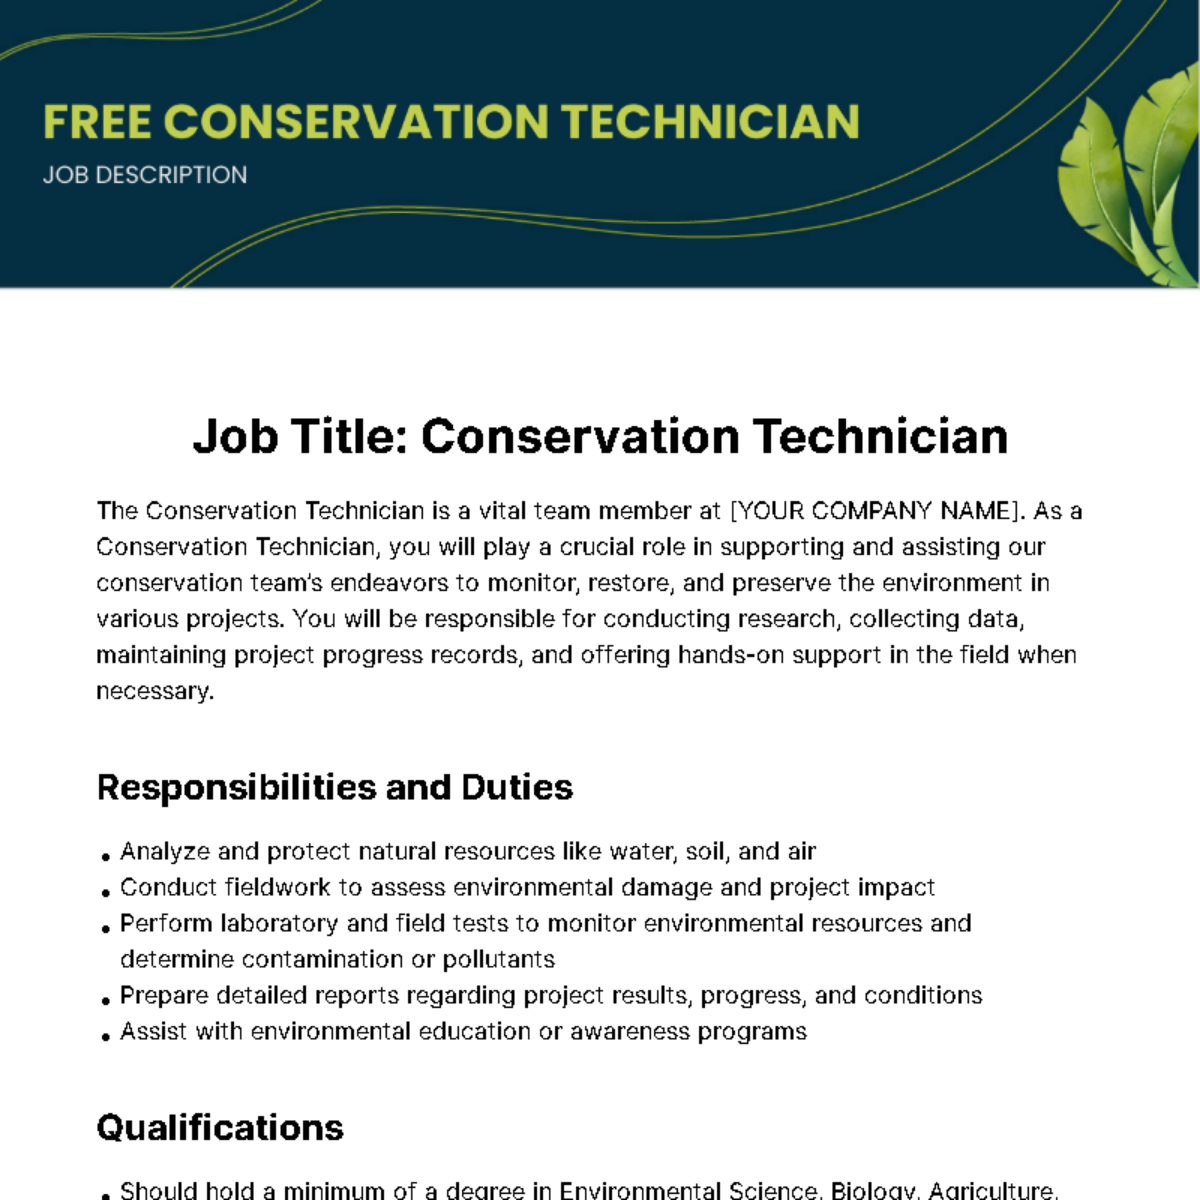 Free Conservation Technician Job Description Template